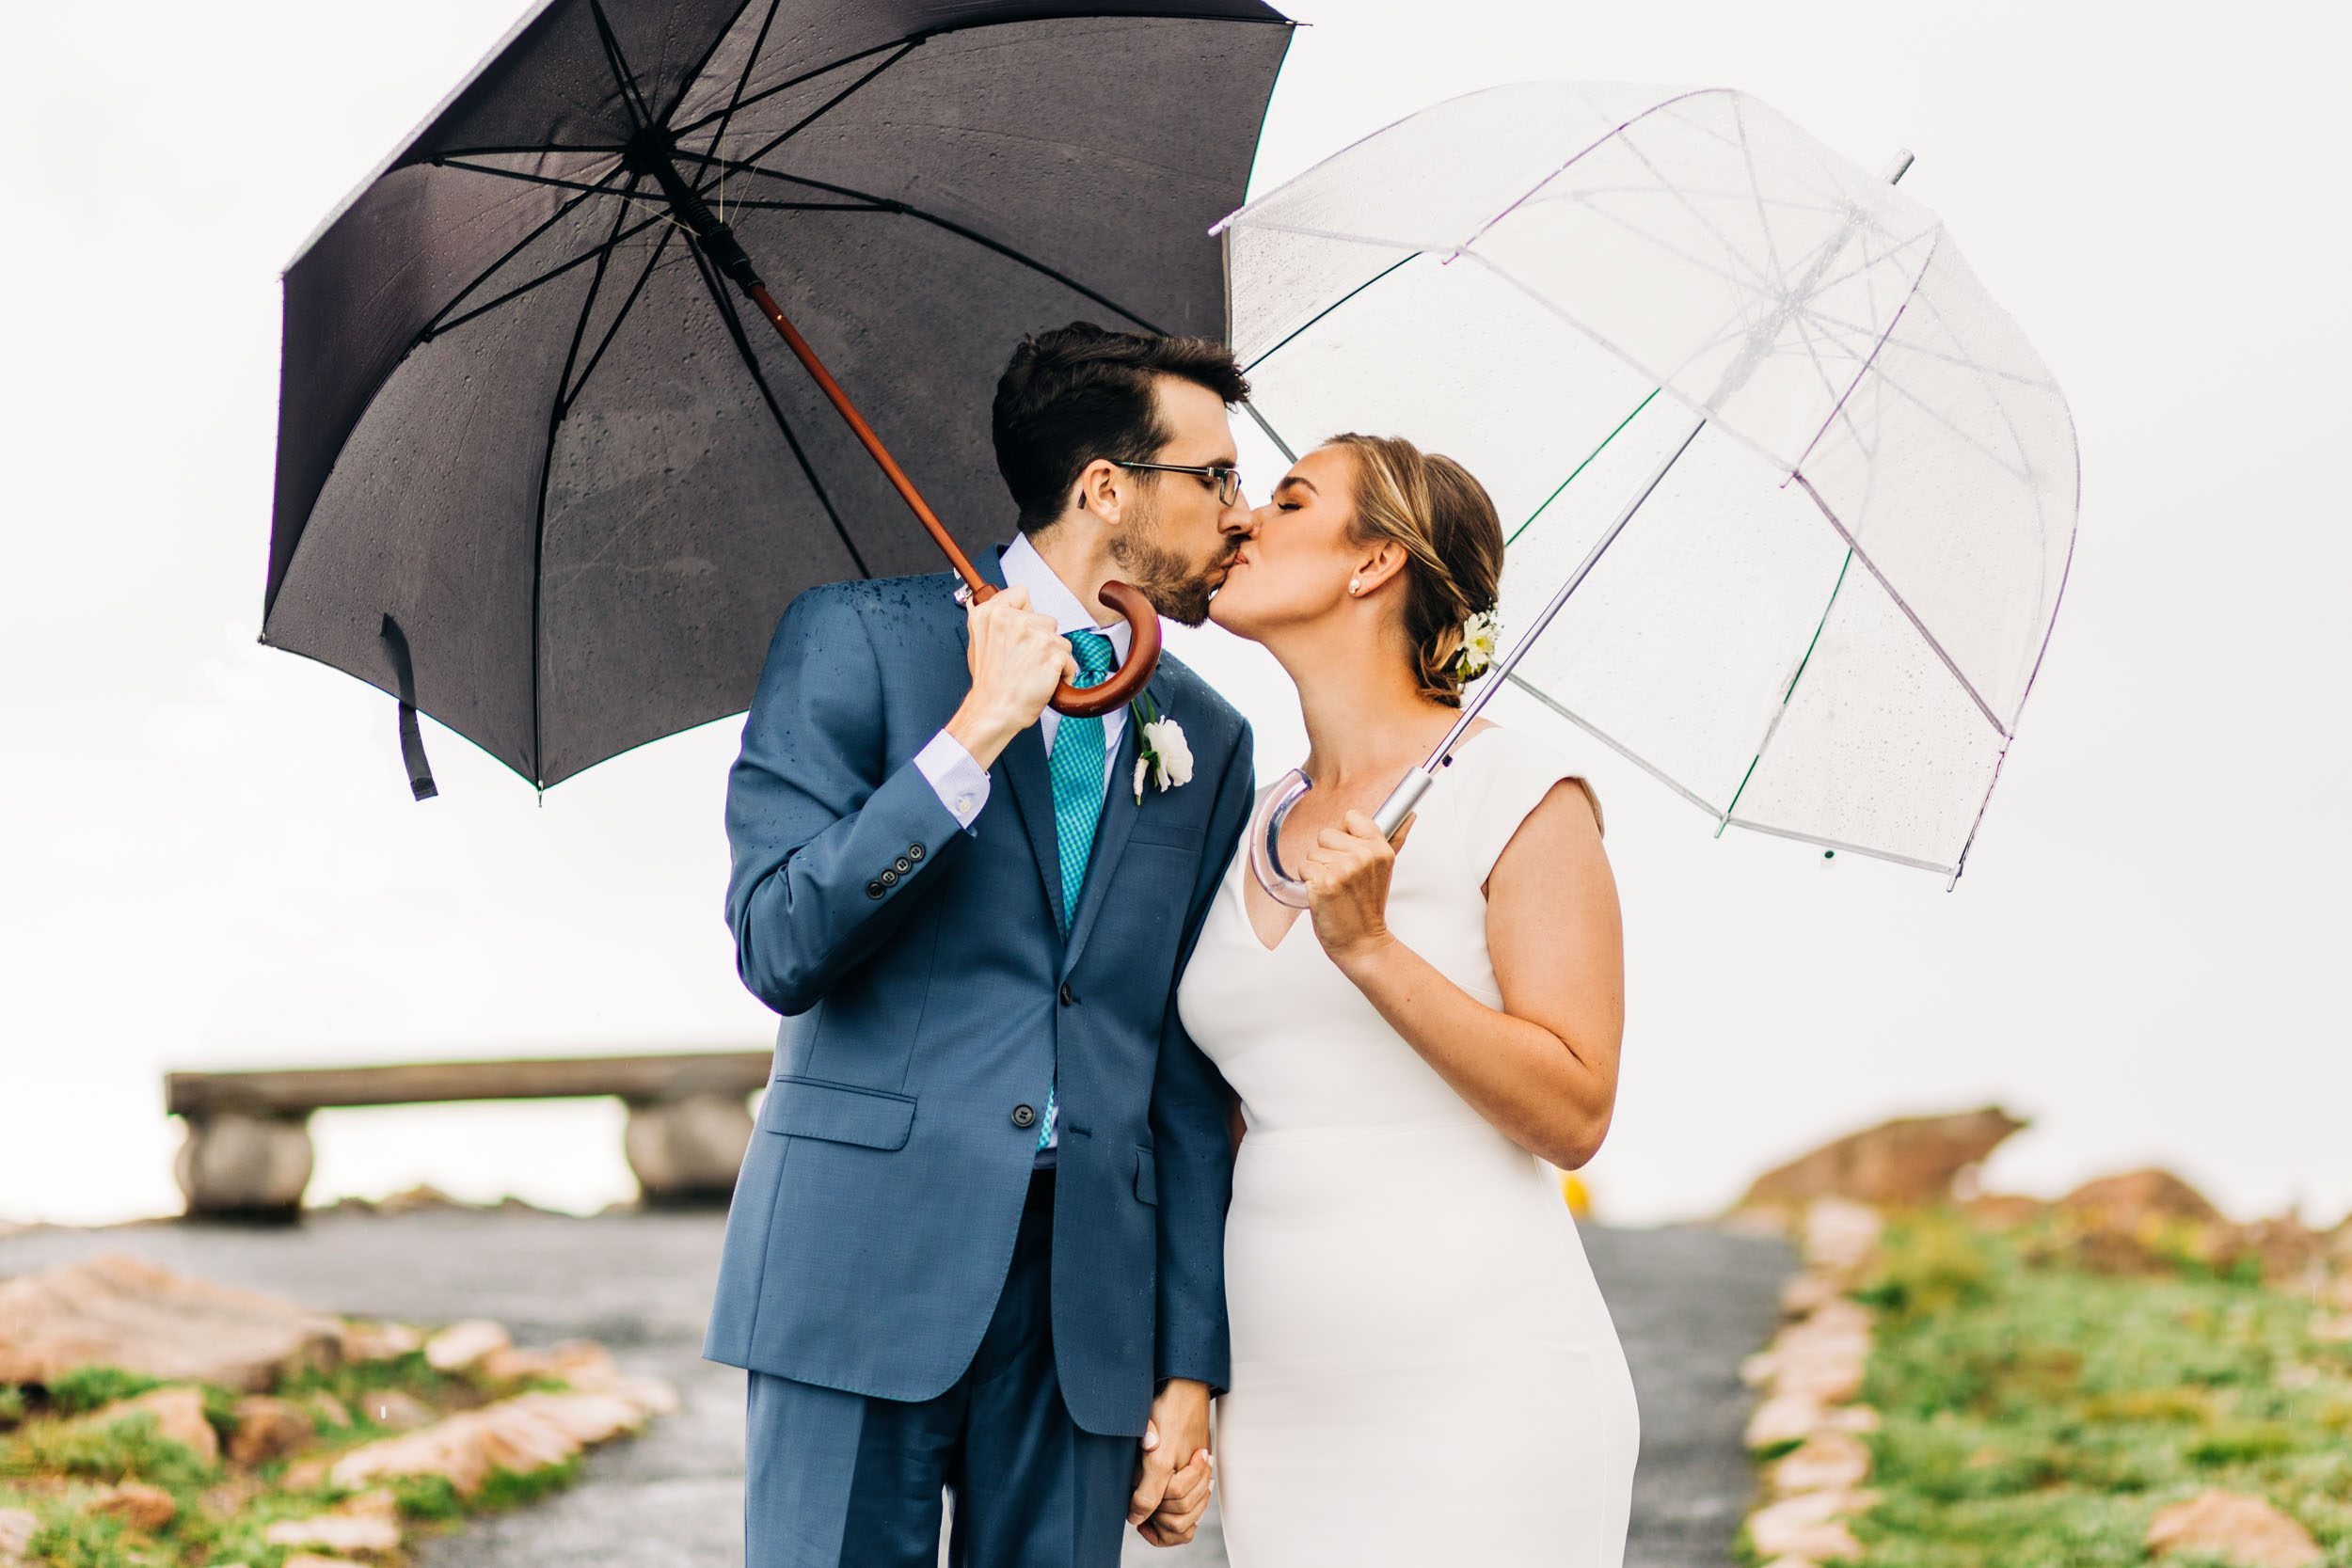 rainy wedding day photo ideas